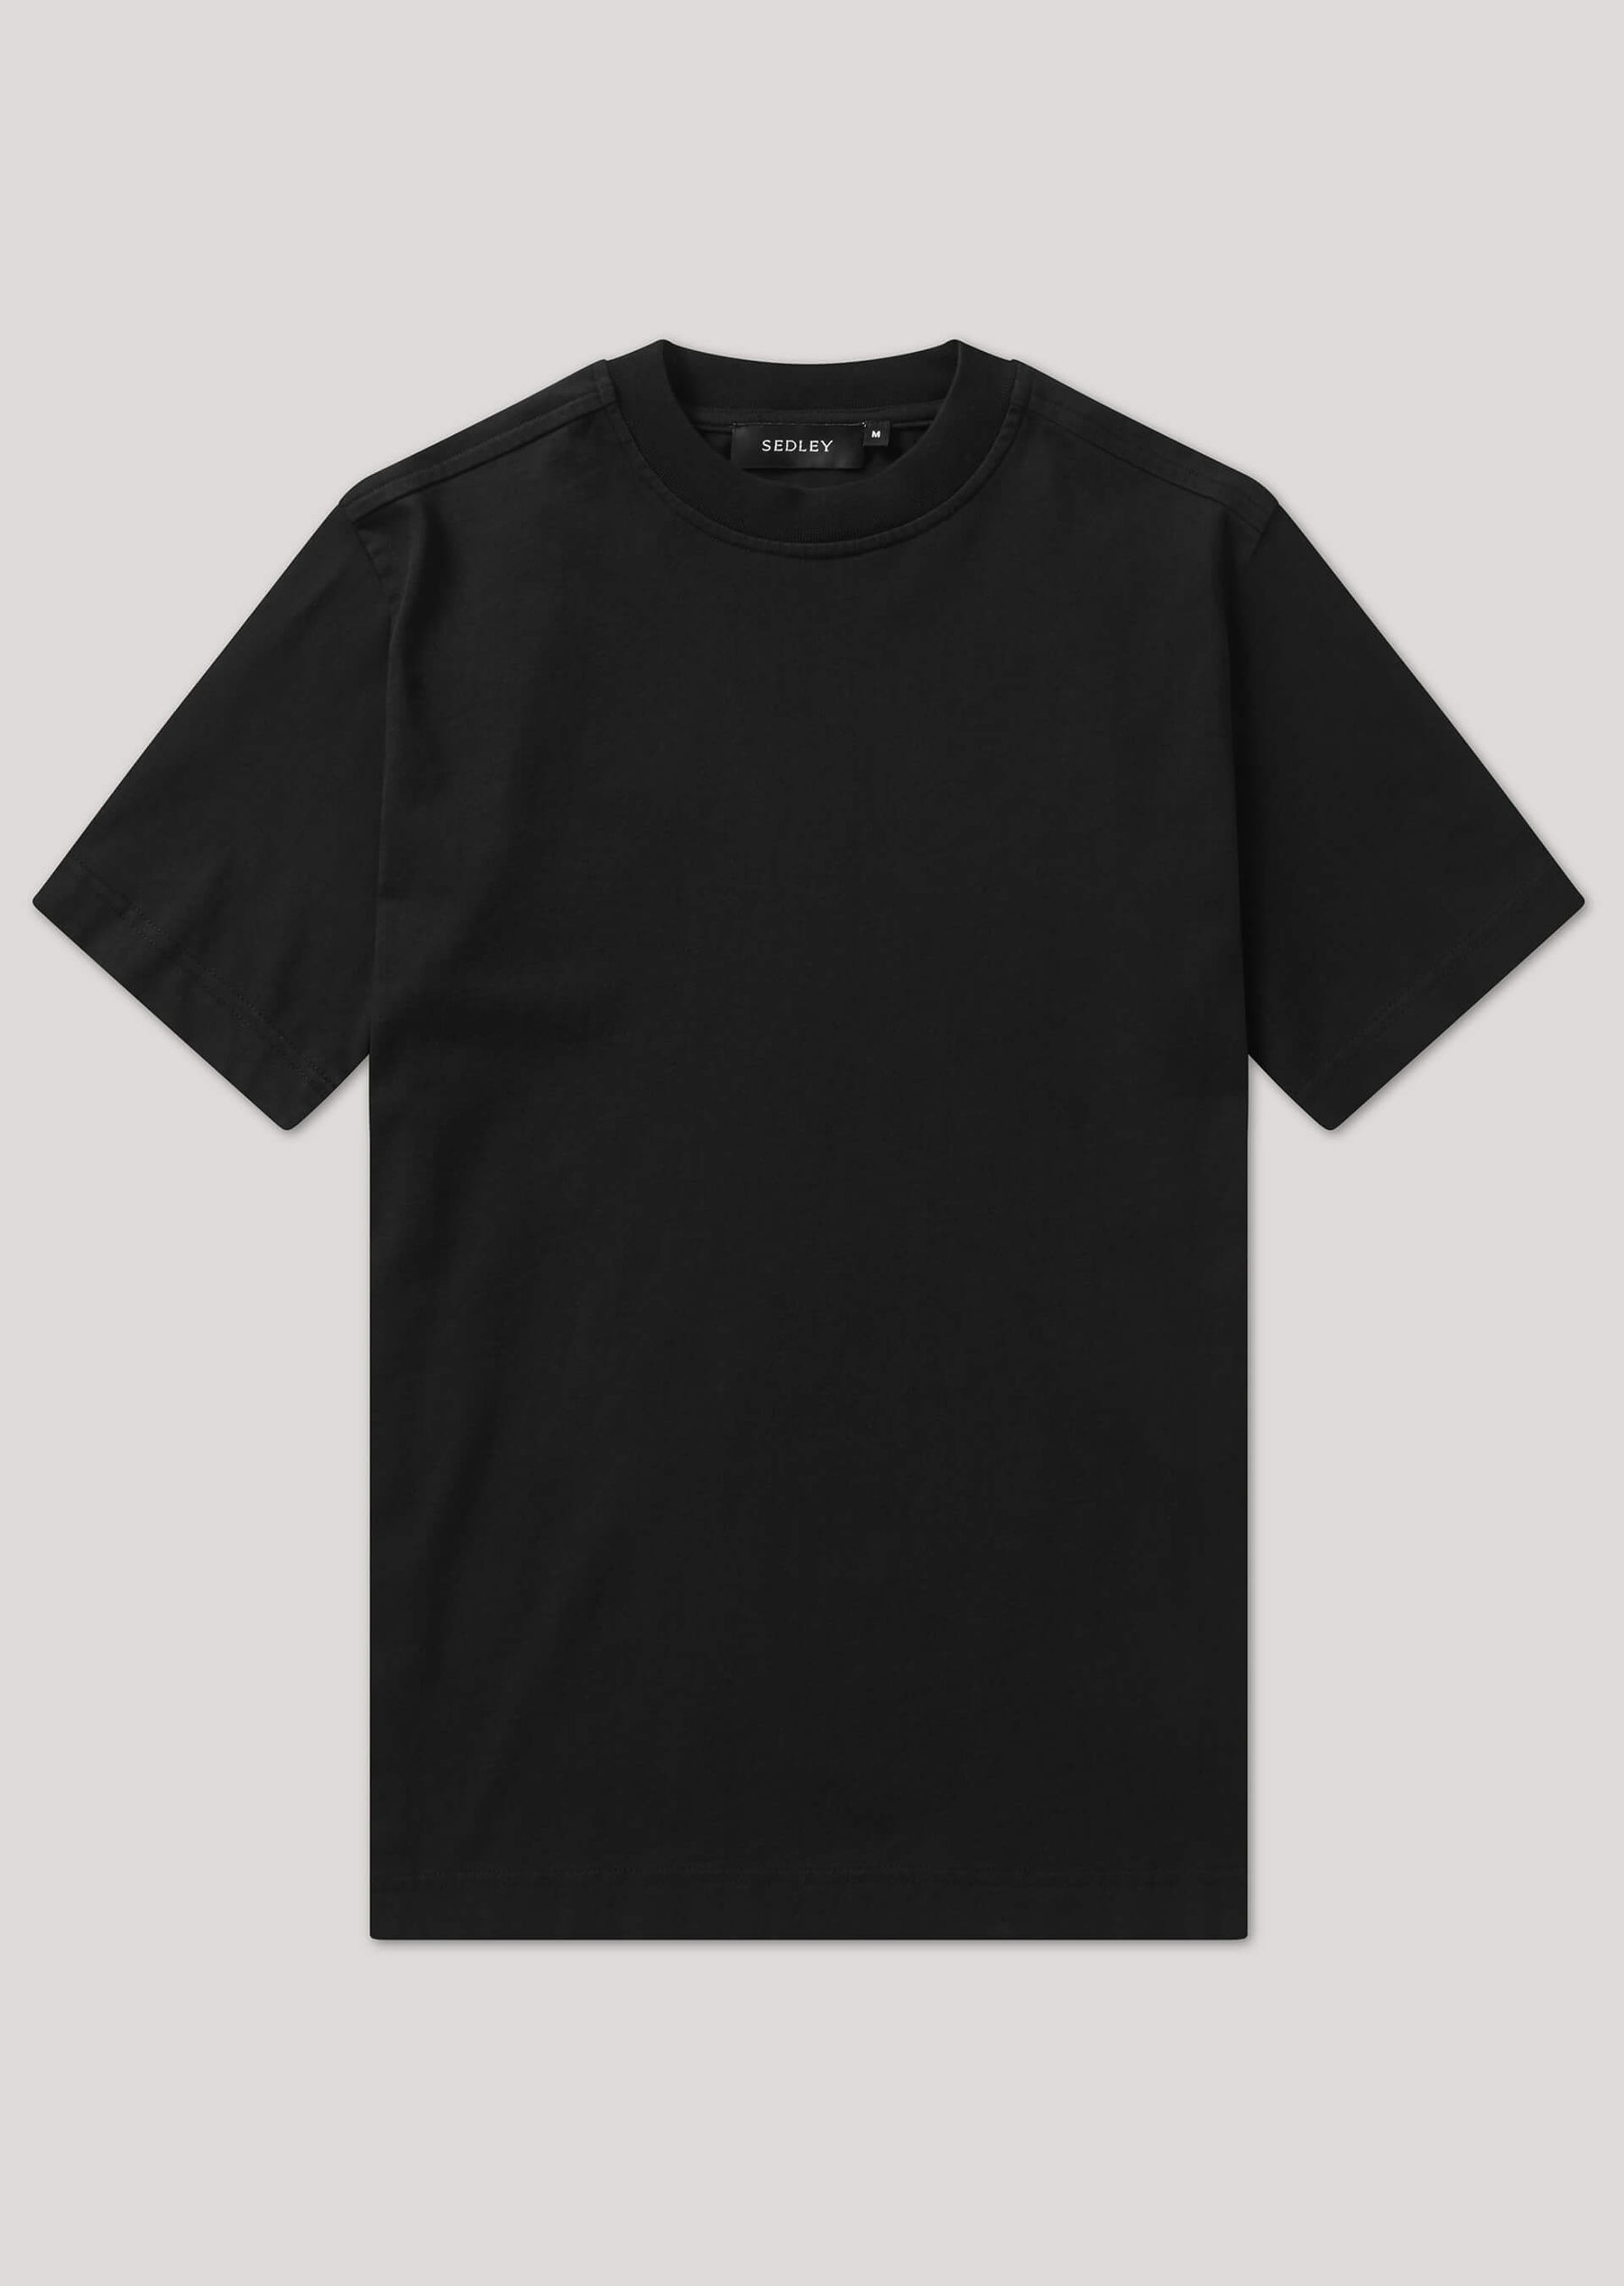 Carton Black Oversized T-Shirt